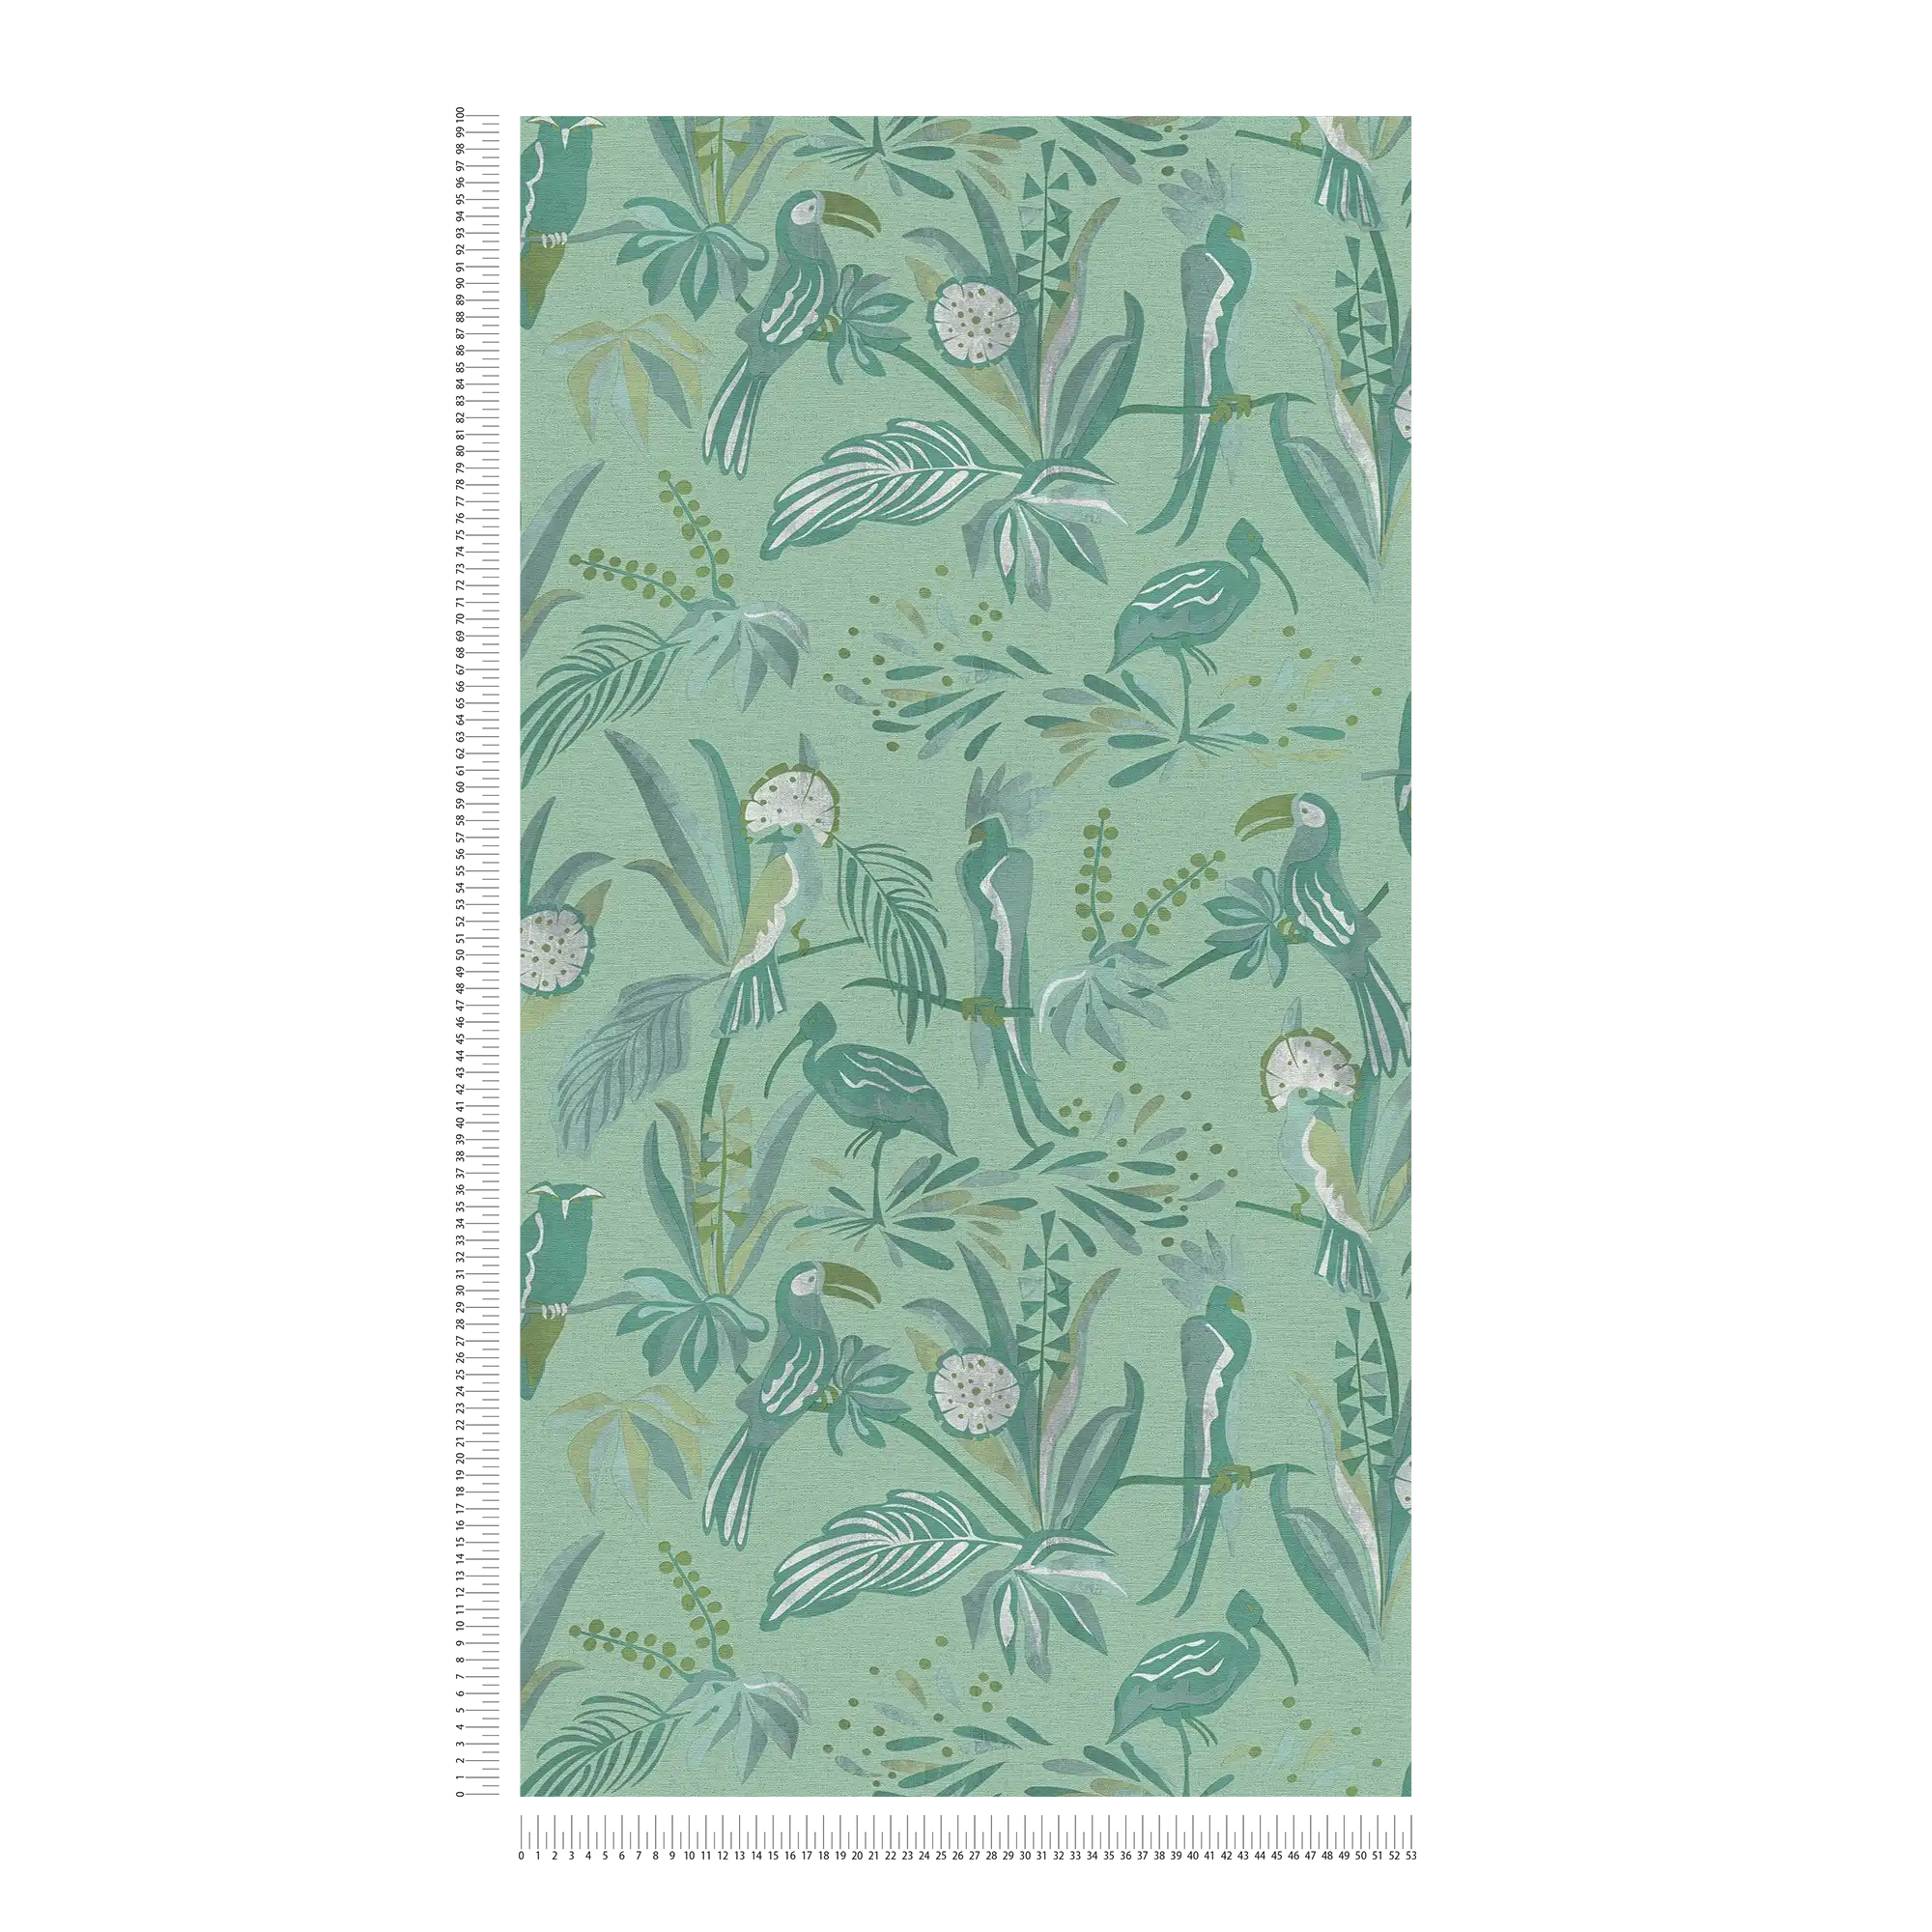             Vliestapete mit Dschungelmotiv Blätter & Vögel – Grün, Grau
        